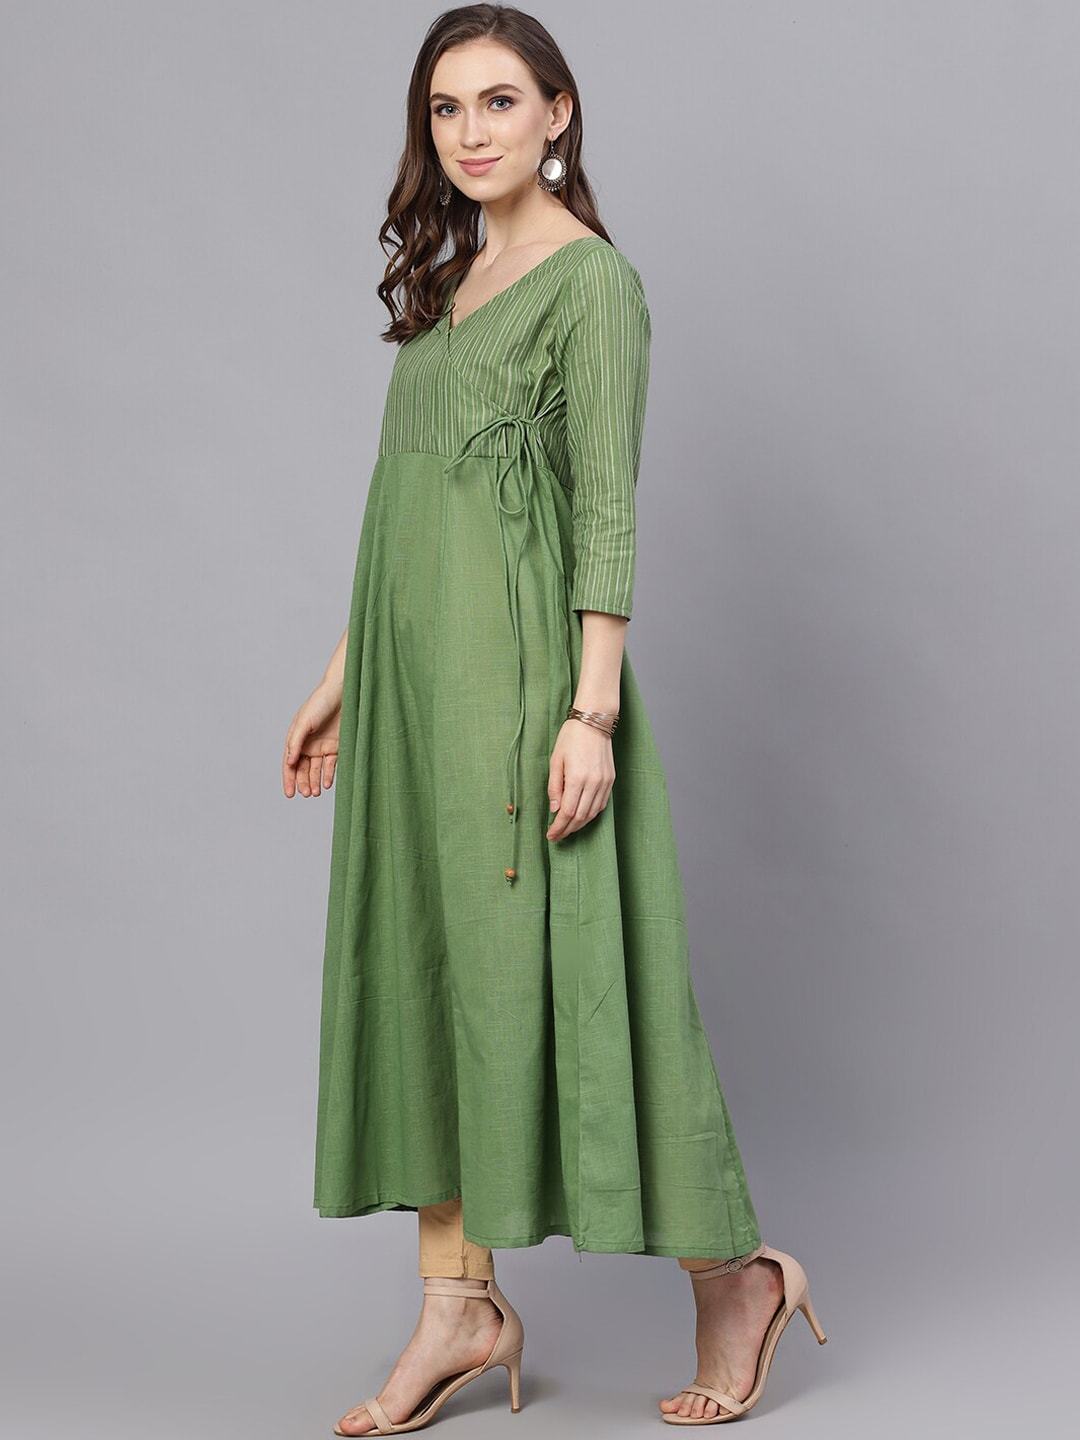 Women's  Green Solid Anarkali Kurta - AKS